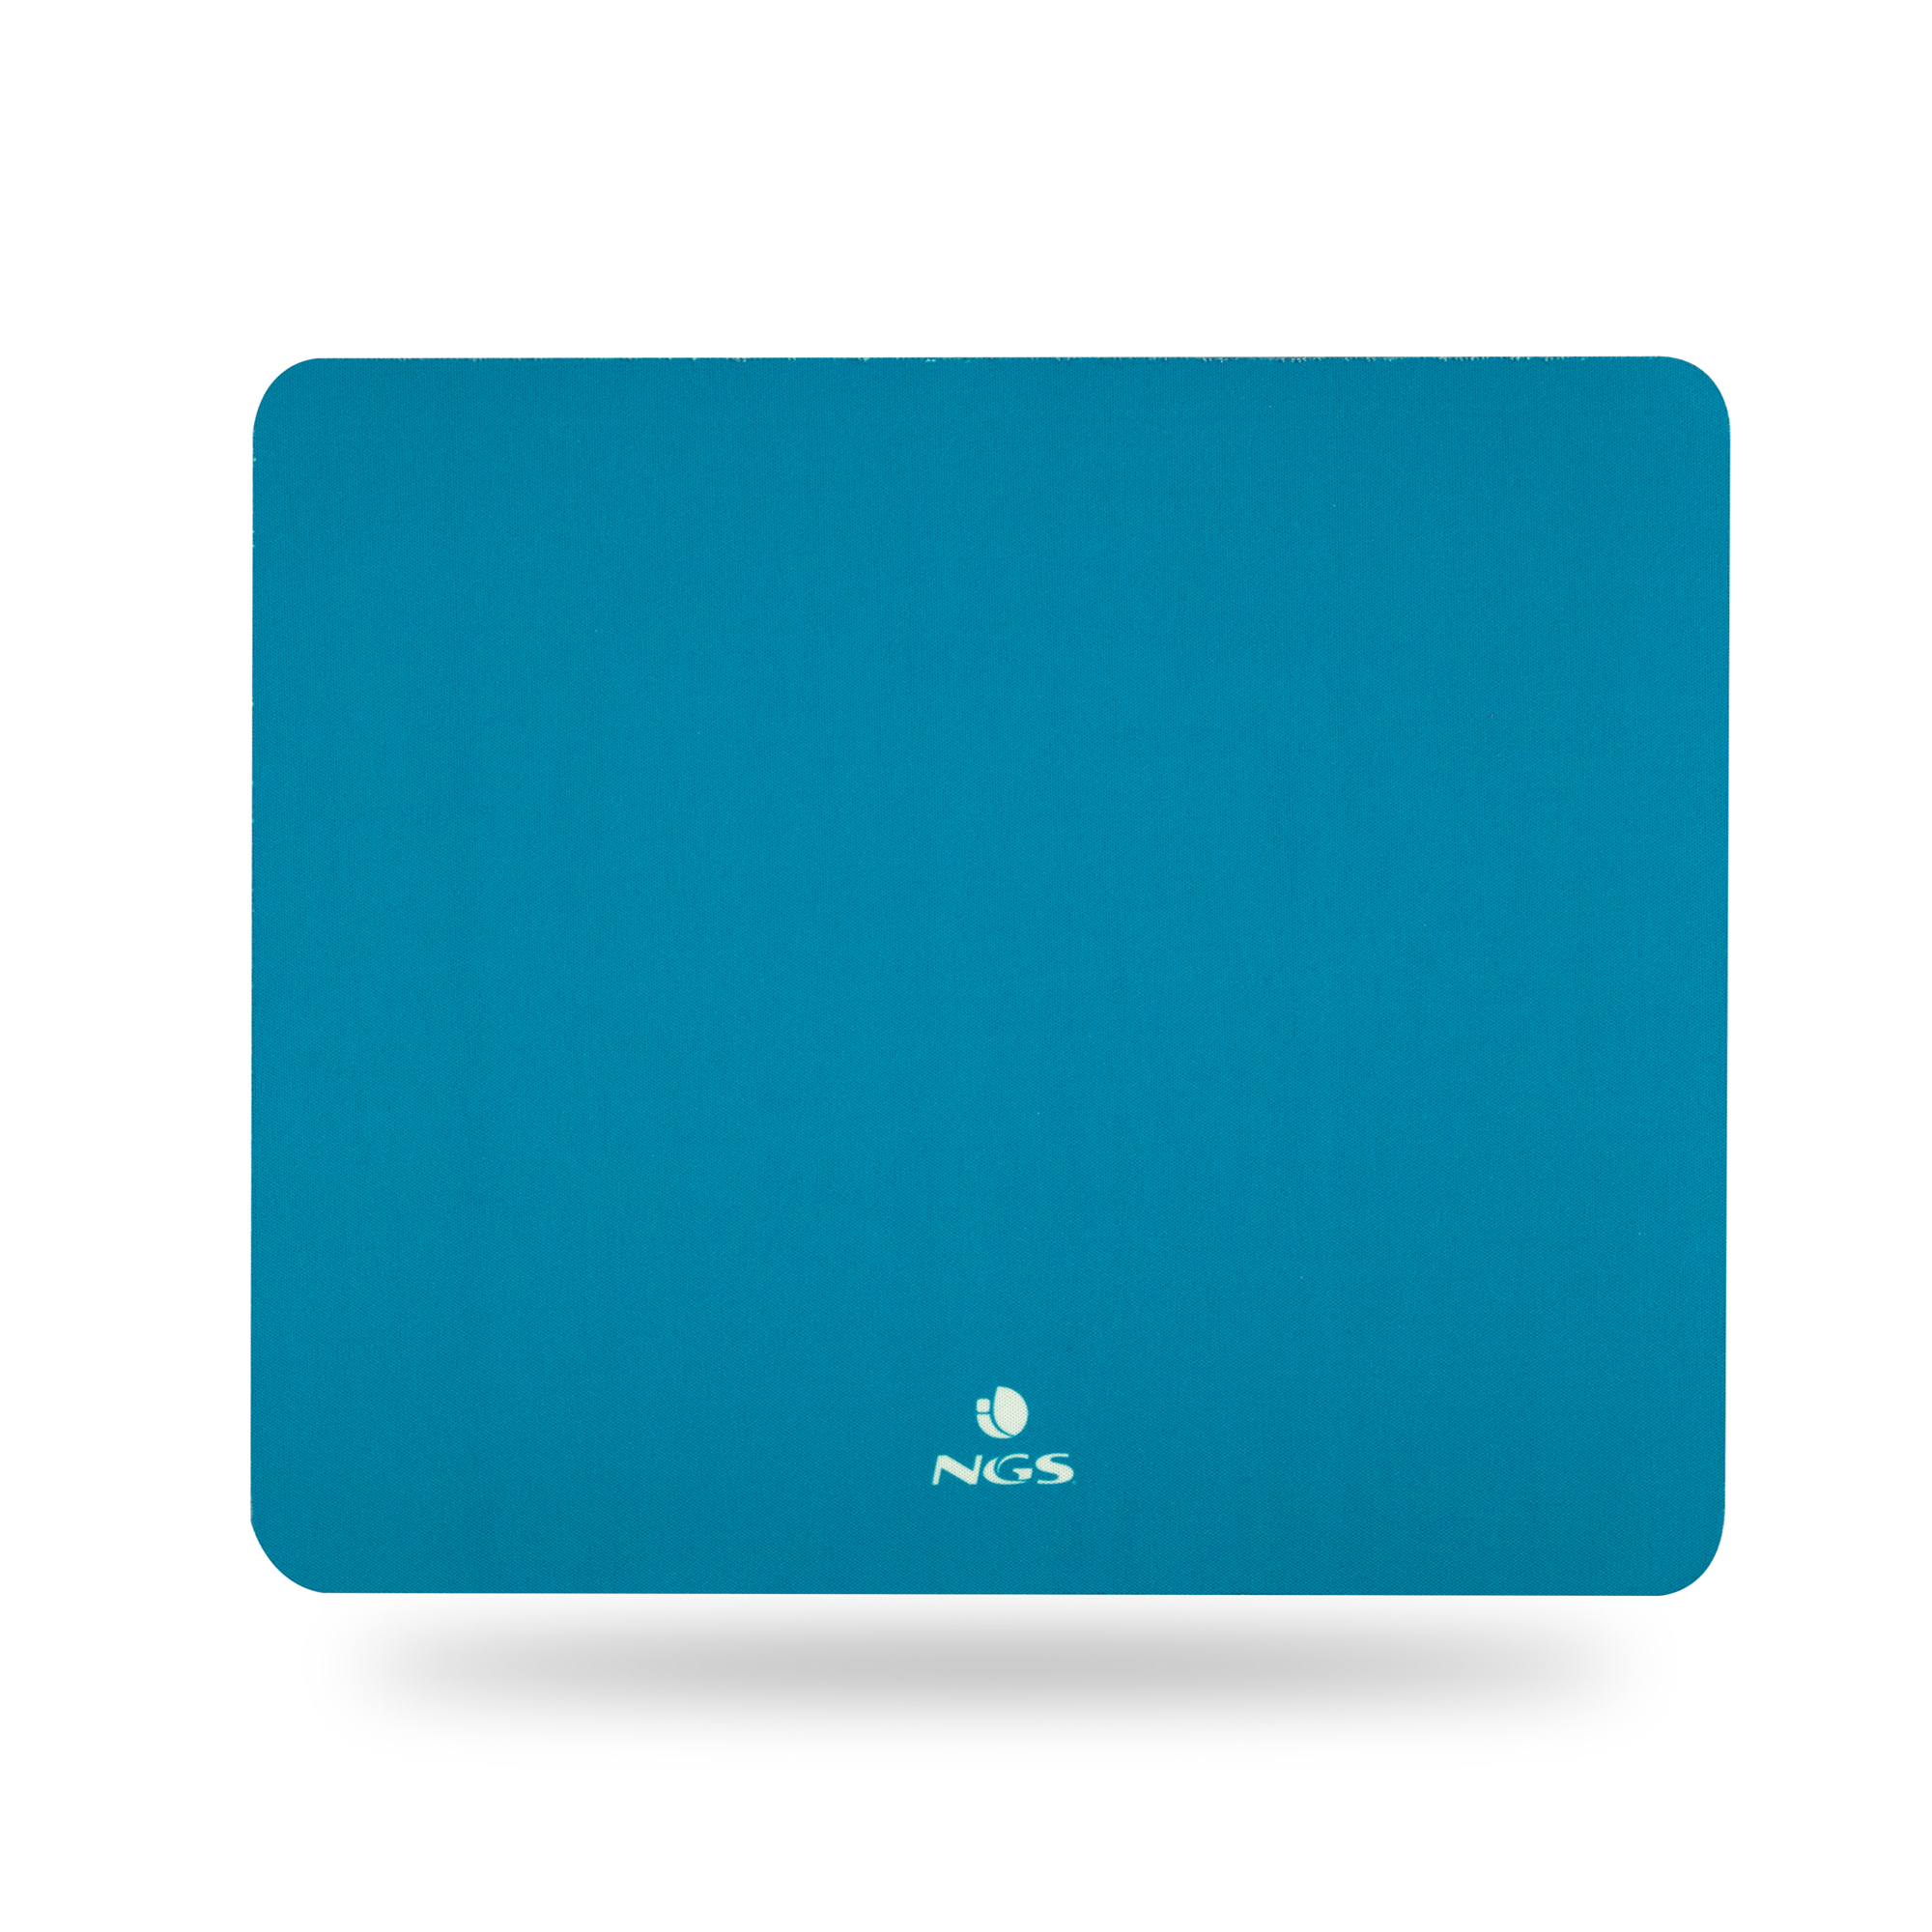 Klim Mousepad Azul ngs1081 alfombrilla para de juegos con base antideslizante ngsmouse1081 kilim blue grande 250mm x 210mm gaming